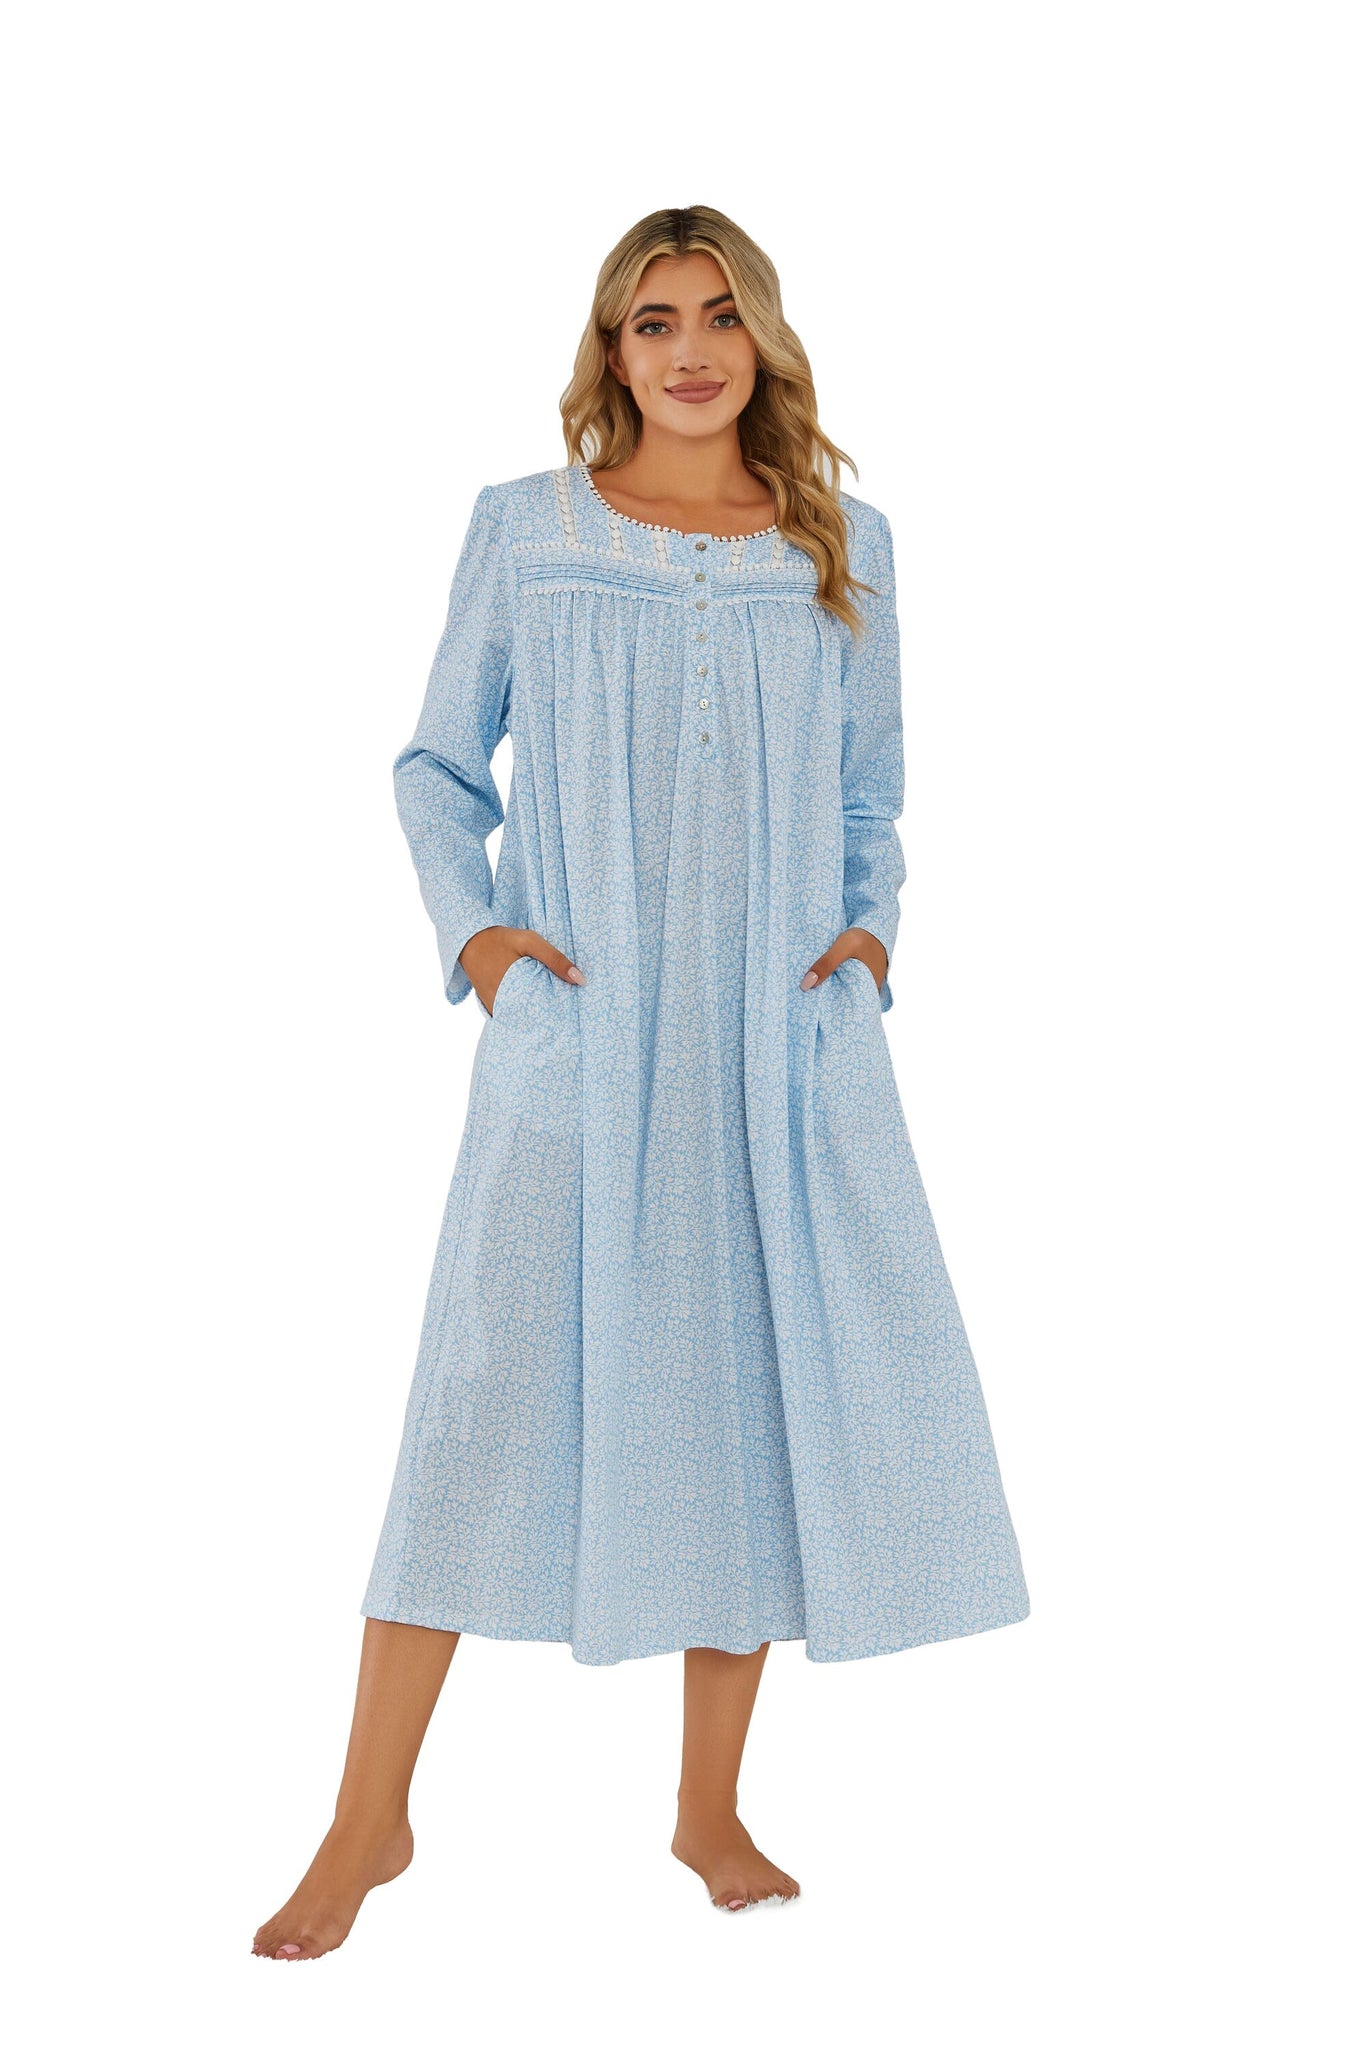 New,suitable Women's Cotton Sleep Shirt, Long Sleeve Button-down Nightshirt  Flannel Night Shirt,l, Blue